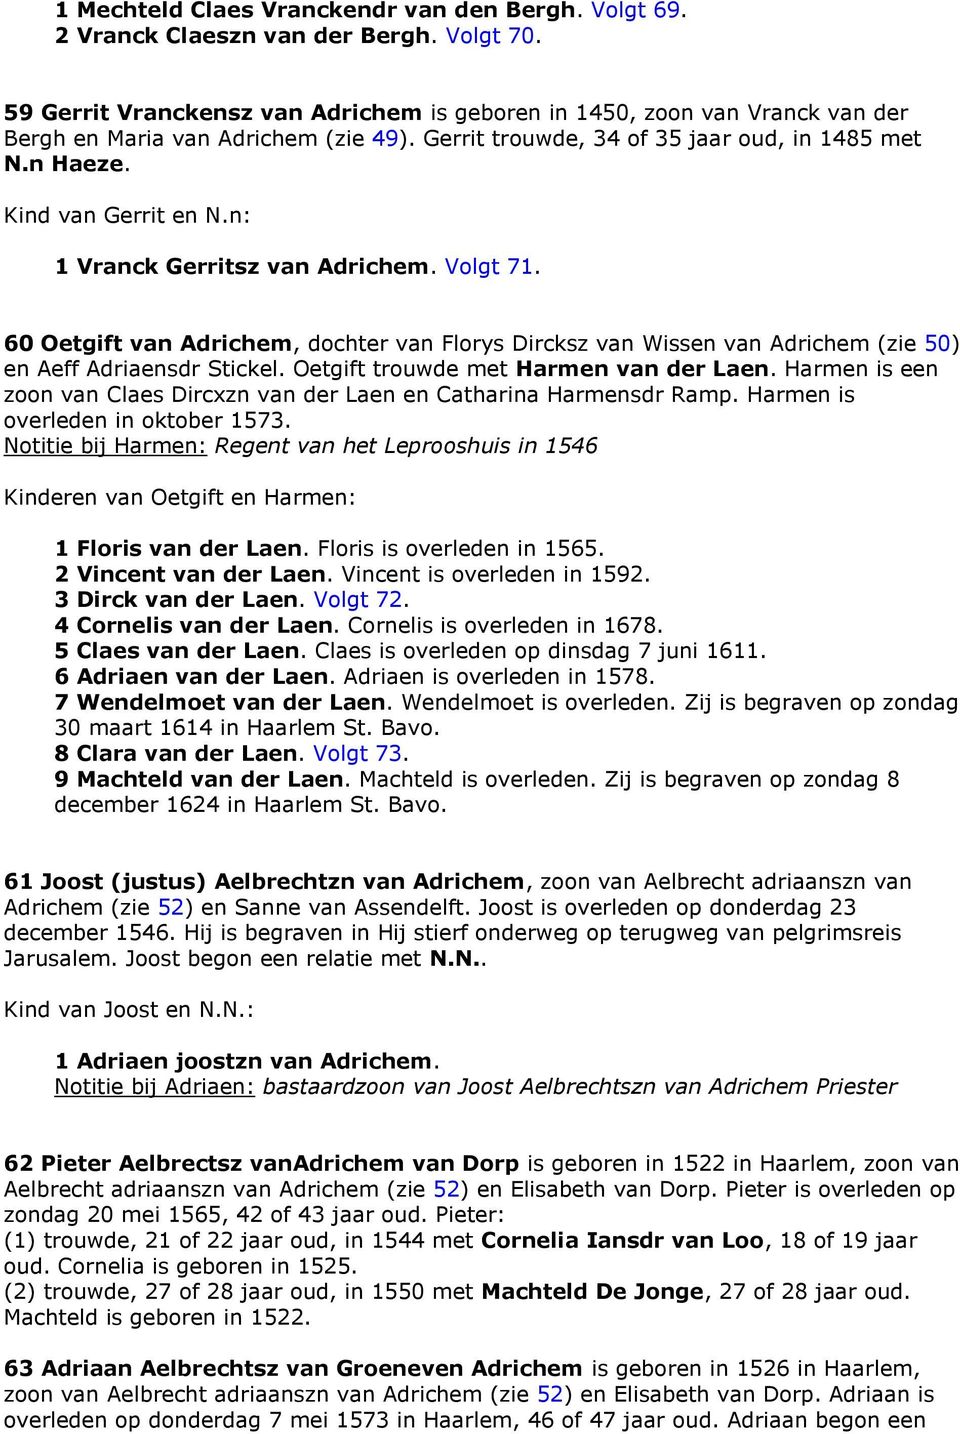 n: 1 Vranck Gerritsz van Adrichem. Volgt 71. 60 Oetgift van Adrichem, dochter van Florys Dircksz van Wissen van Adrichem (zie 50) en Aeff Adriaensdr Stickel. Oetgift trouwde met Harmen van der Laen.